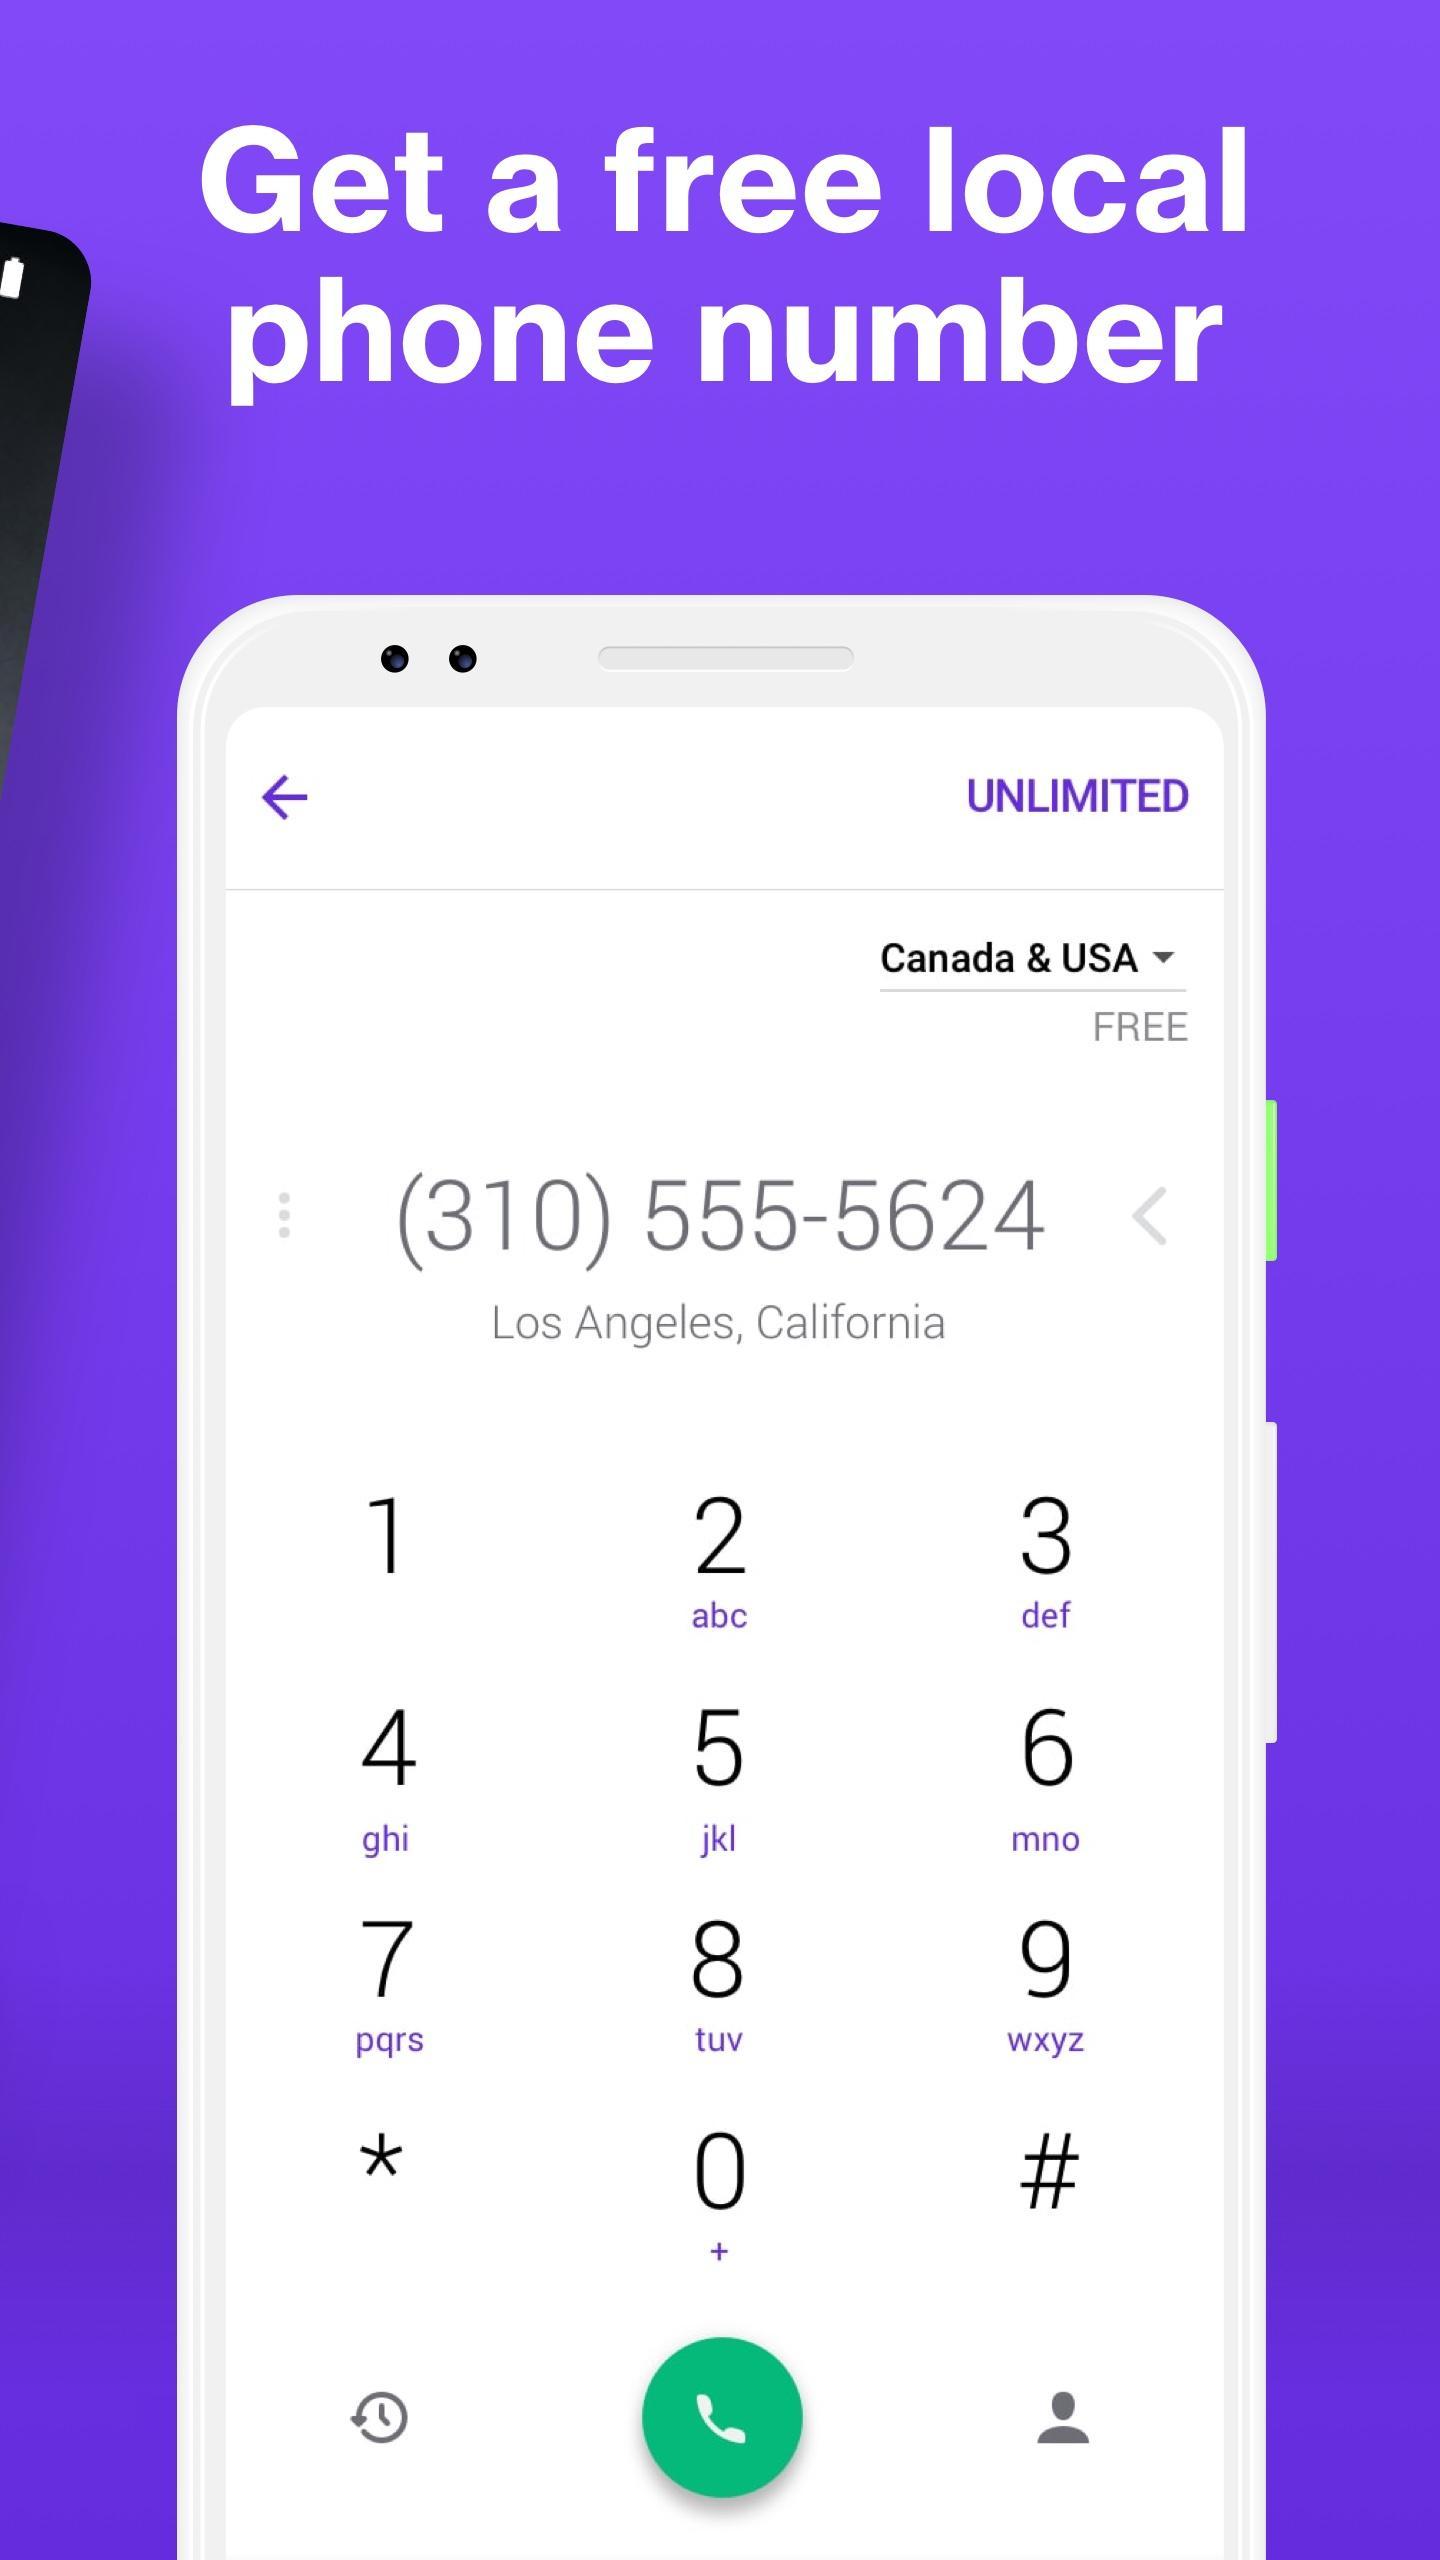 TextNow - Free US Phone Number